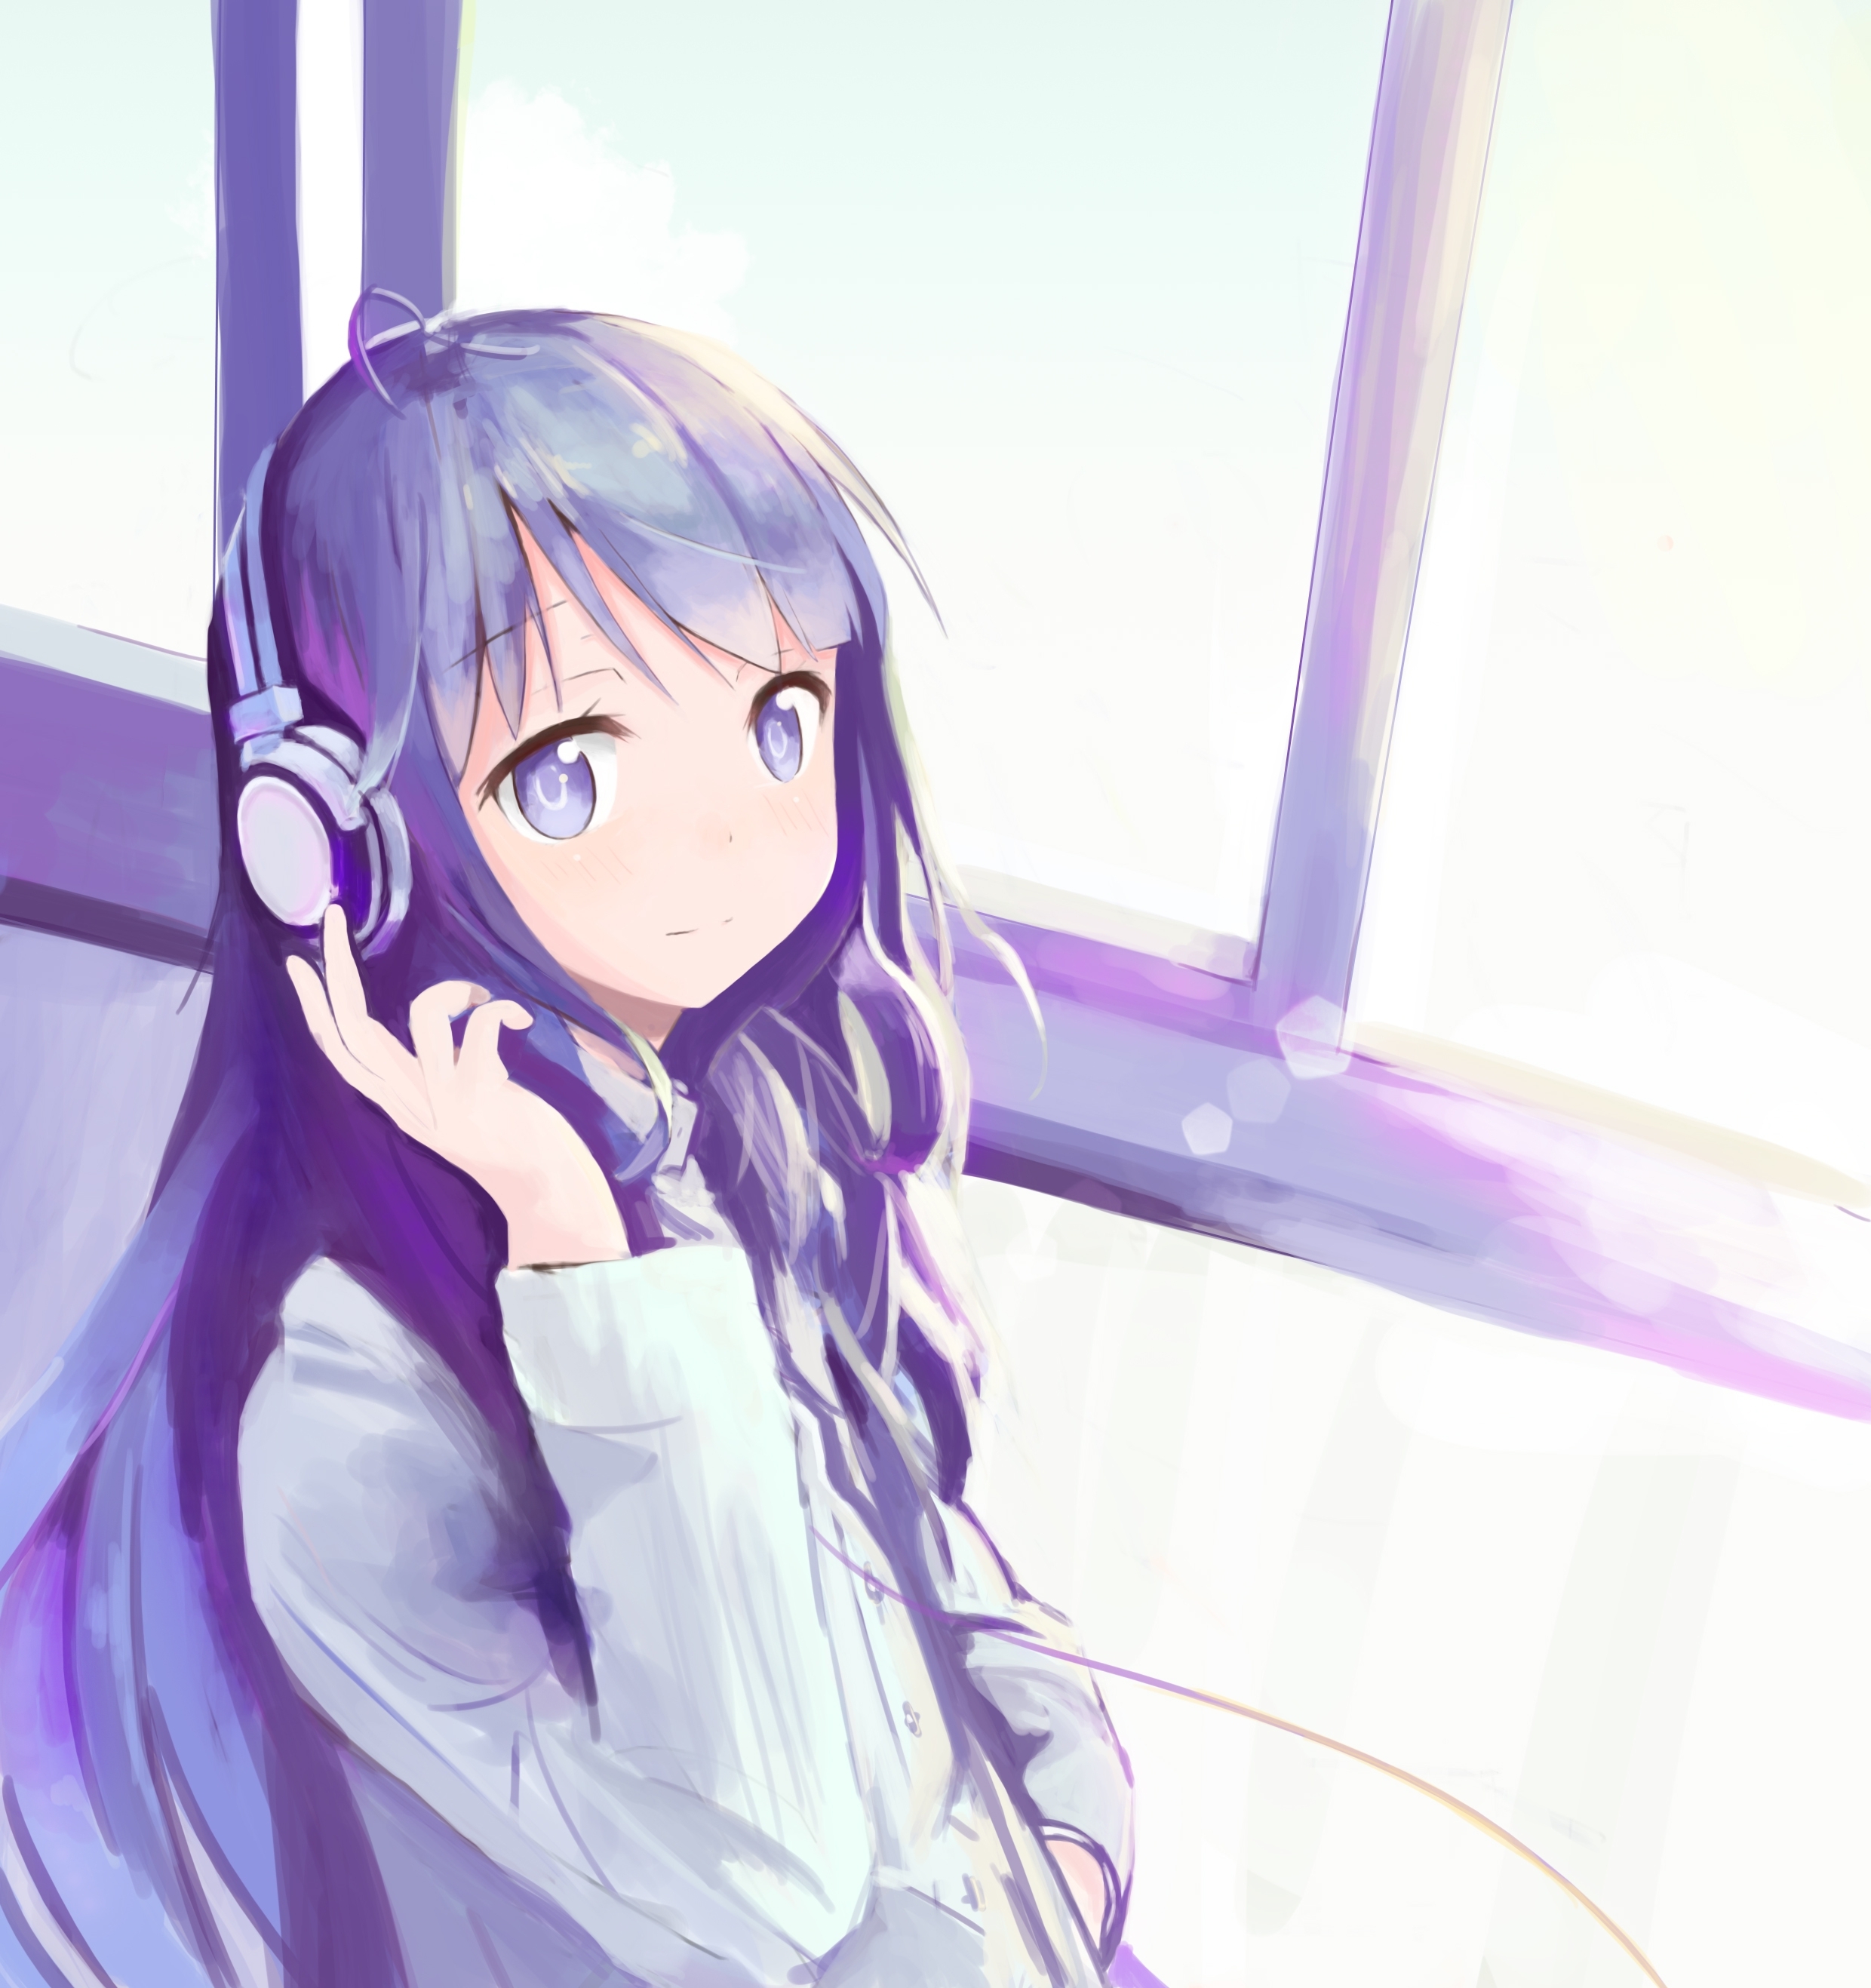 anime girl with headphones and purple hair